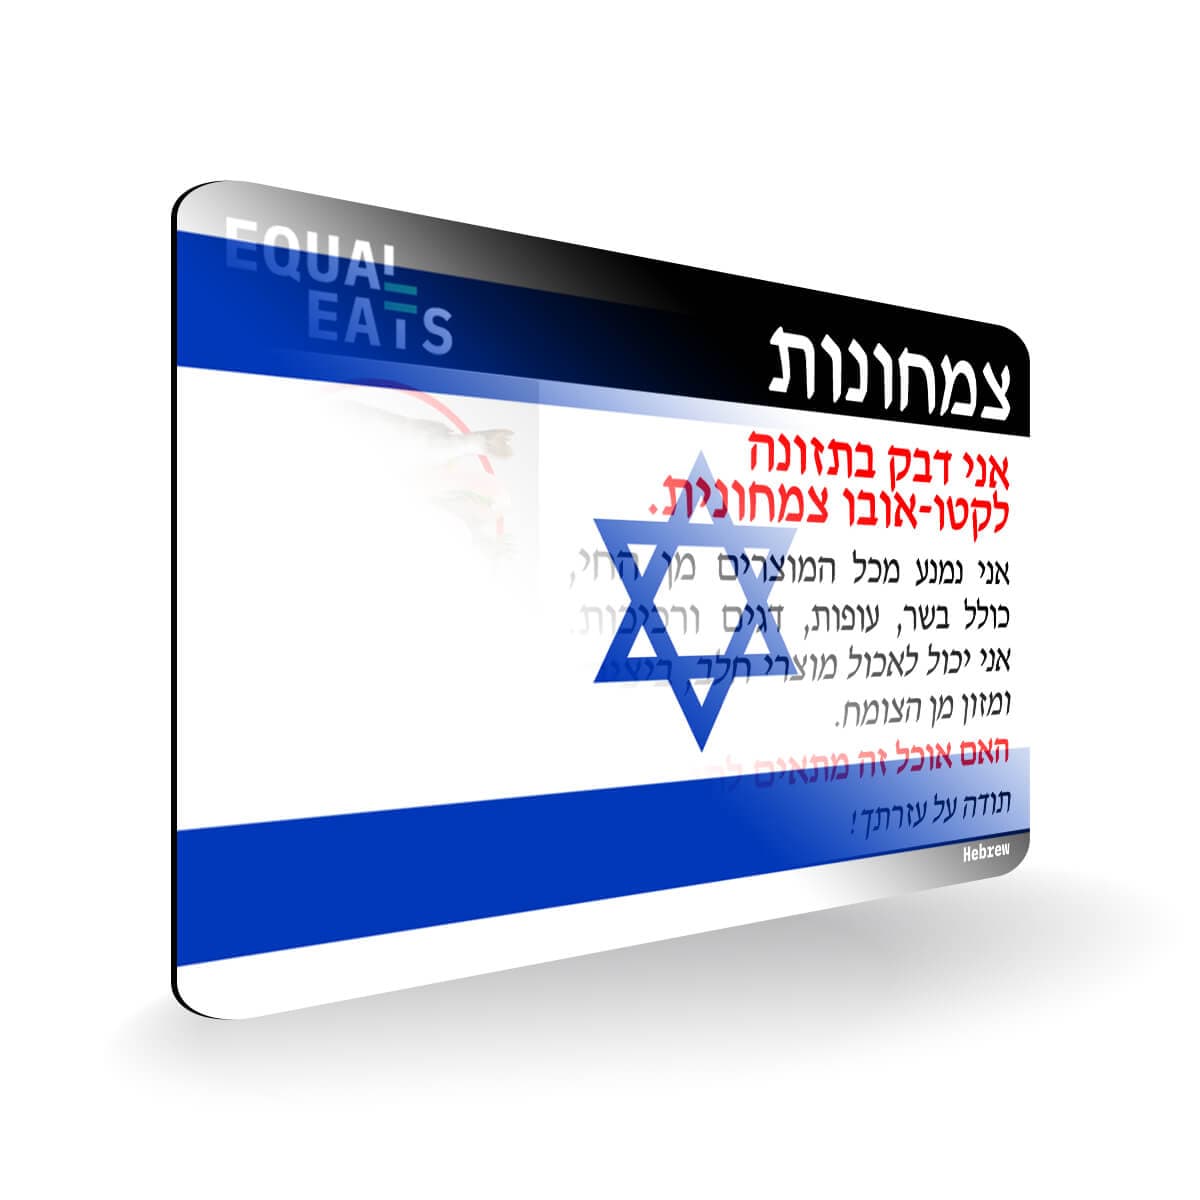 Lacto Ovo Vegetarian Diet in Hebrew. Vegetarian Card for Israel